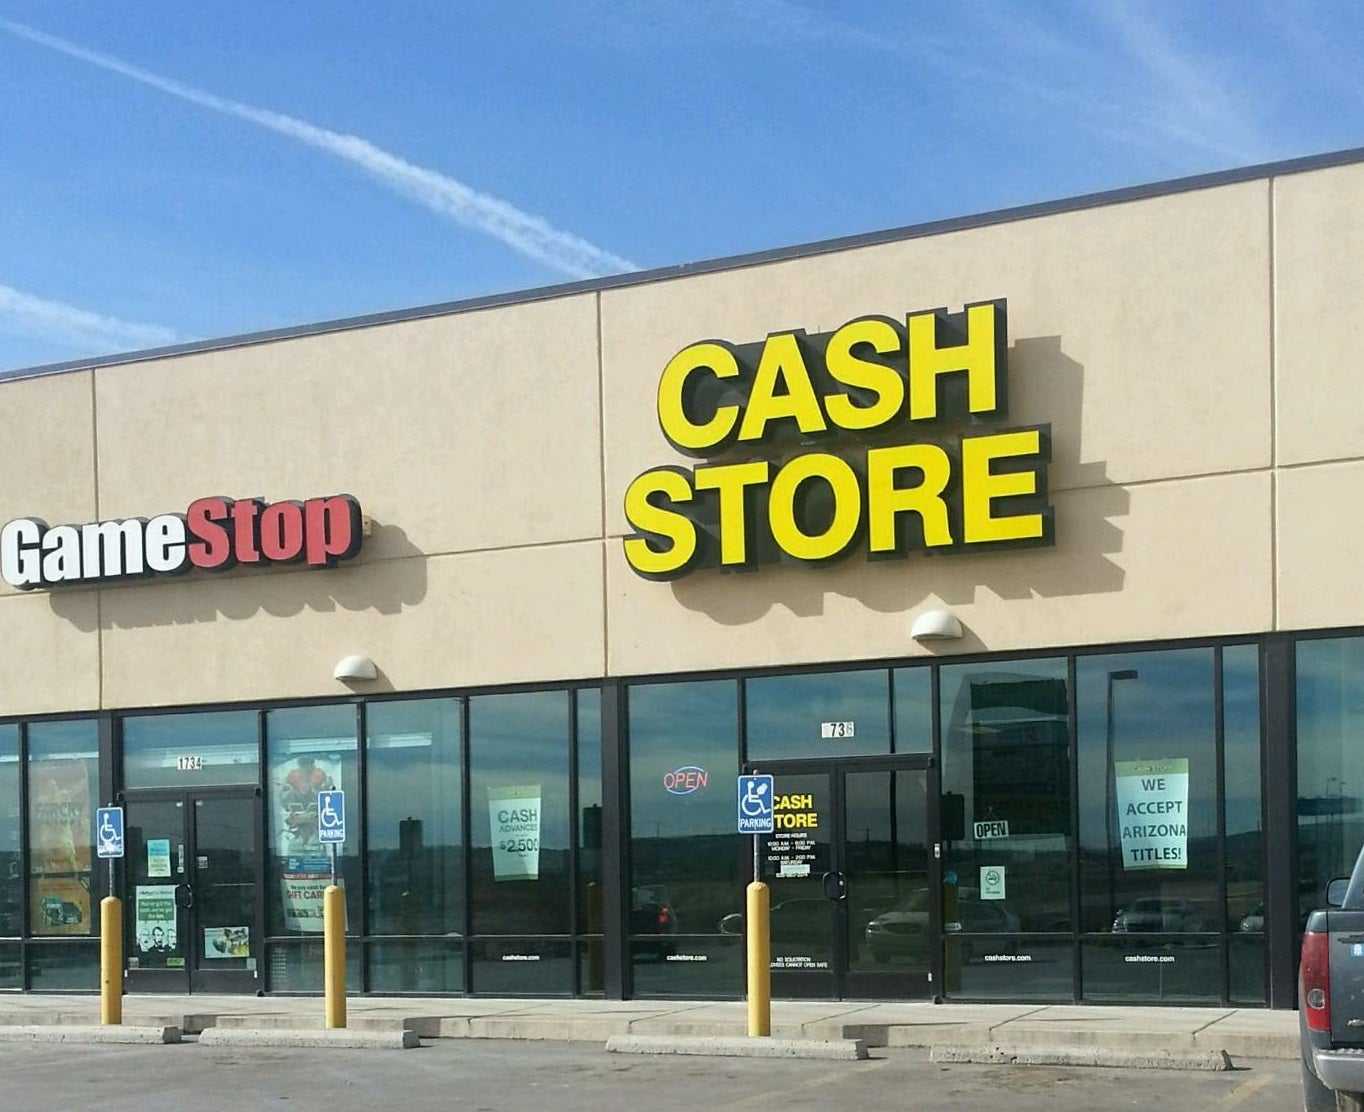 Cash Store 01